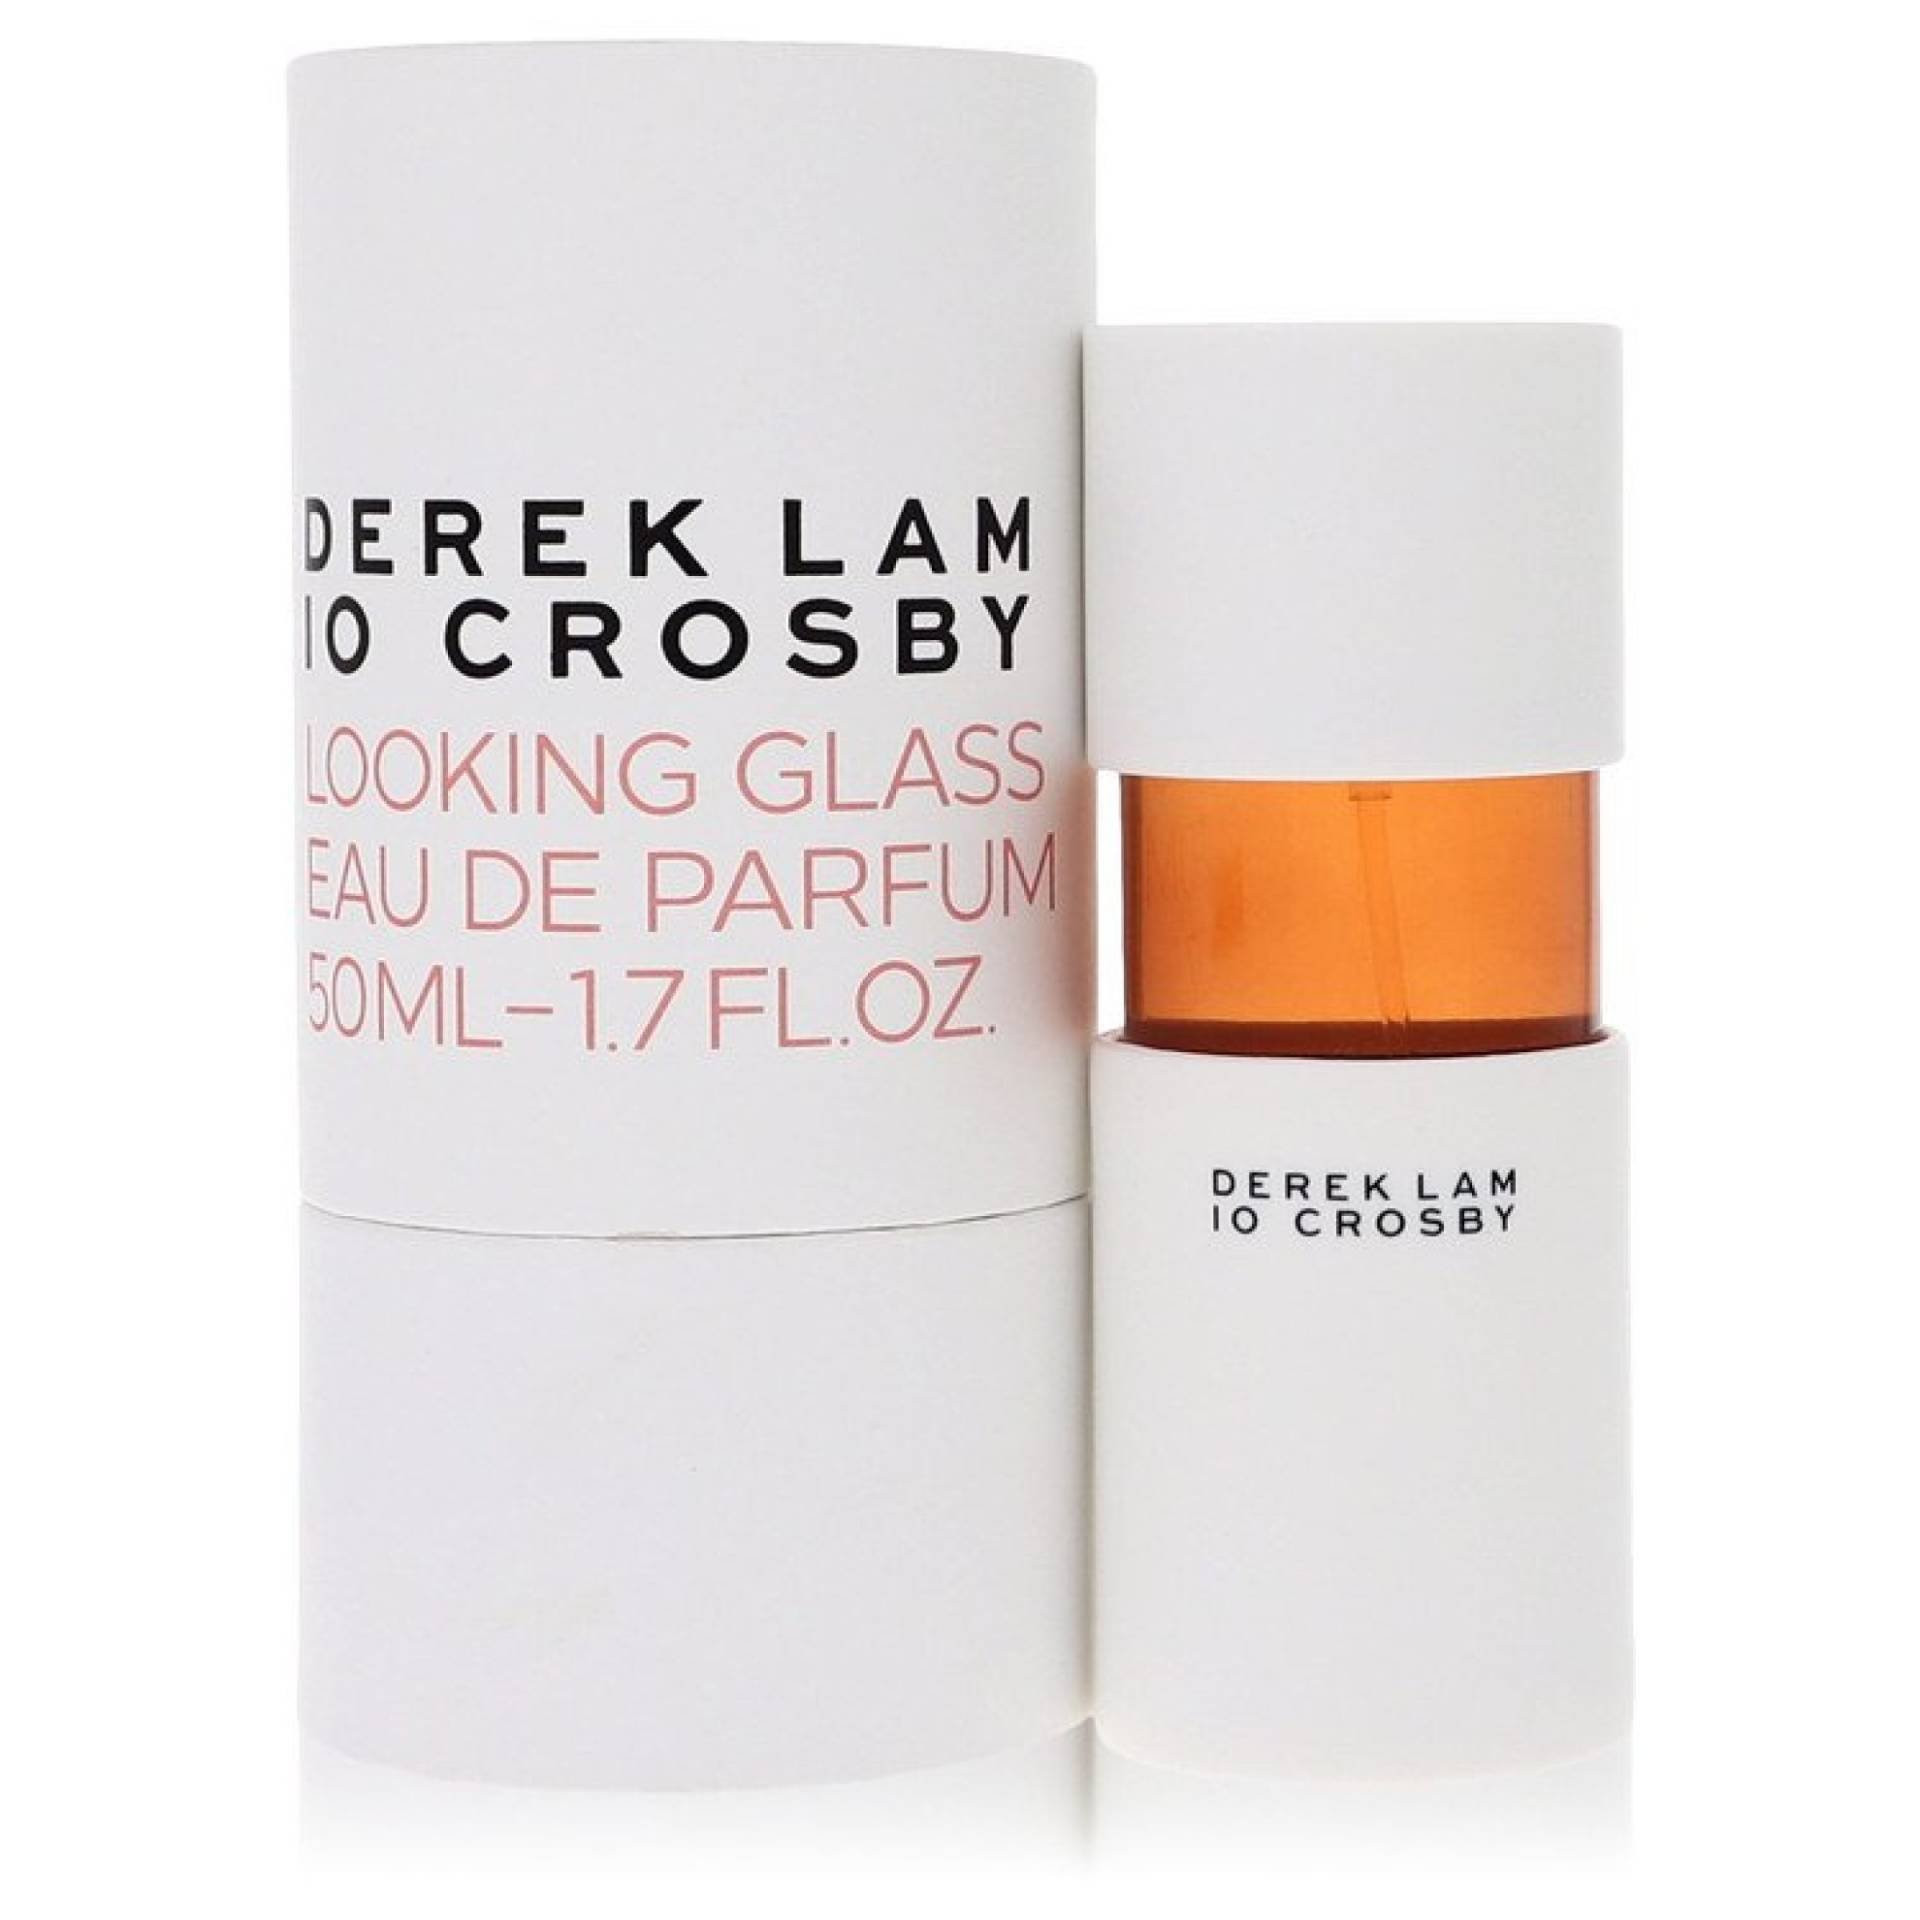 Derek Lam 10 Crosby Looking Glass Eau De Parfum Spray 50 ml von Derek Lam 10 Crosby